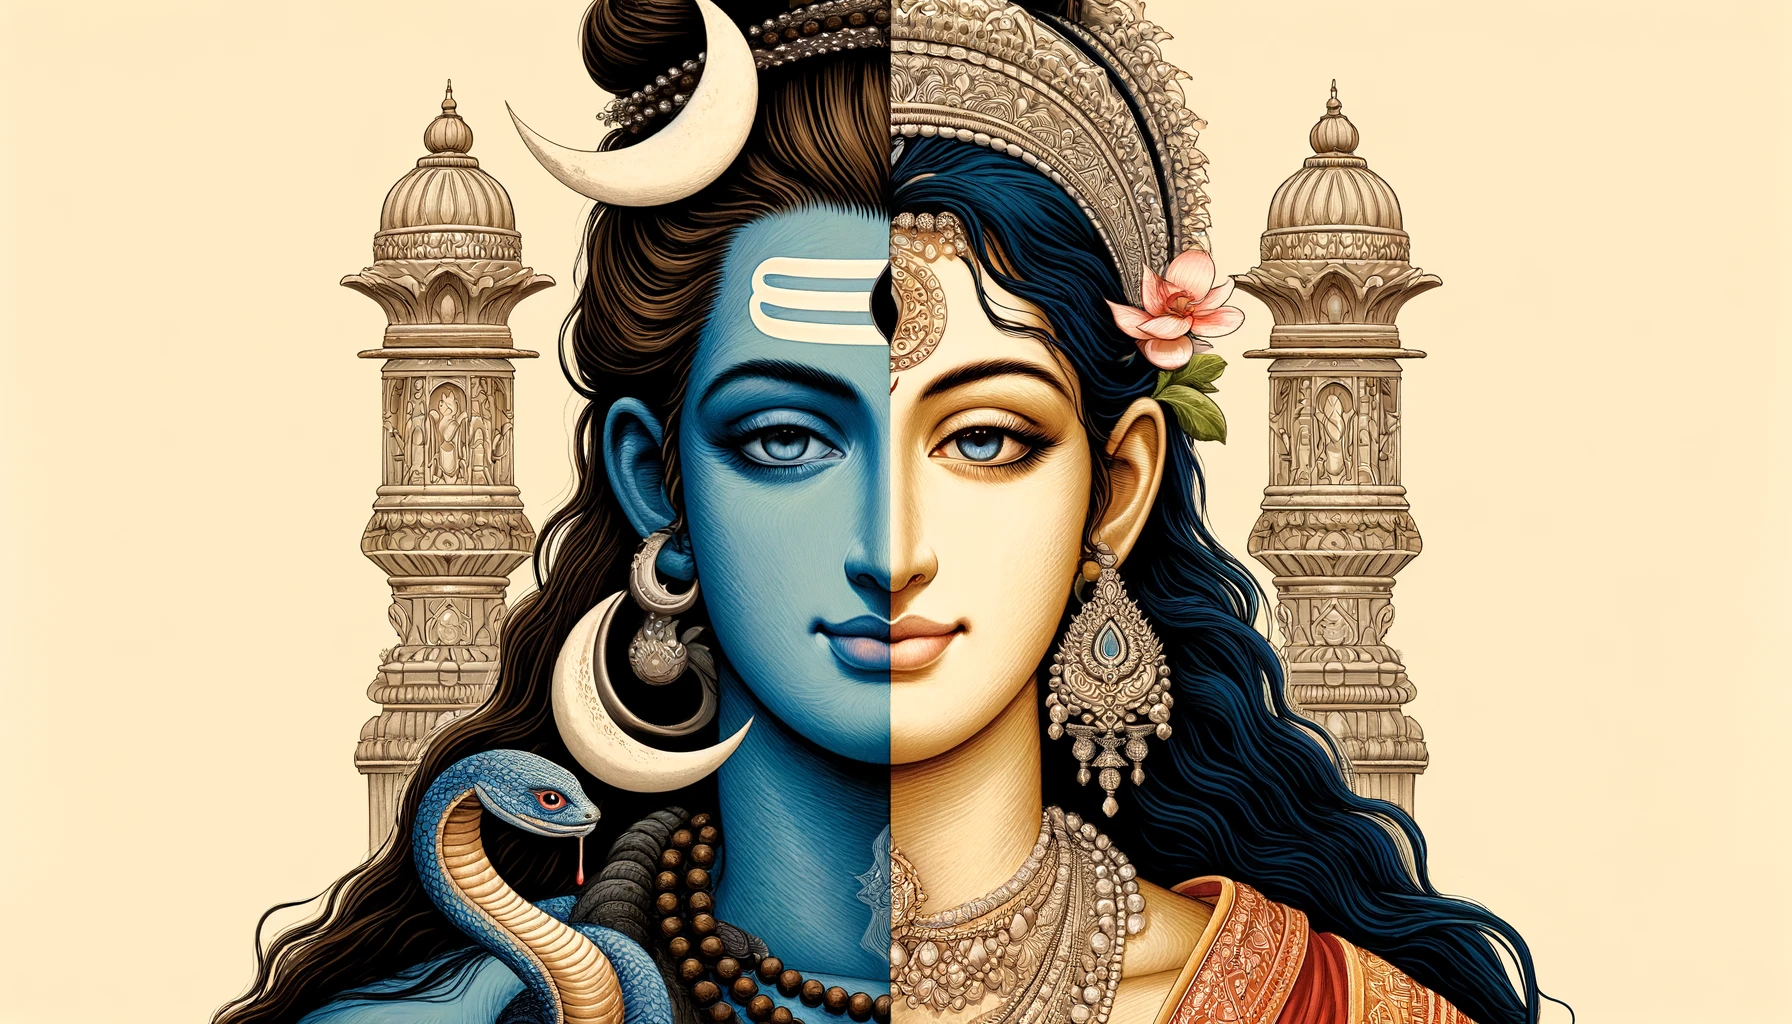 symbole de la dualité en spiritualité, Ardhanarishvara, fusion de shiva et parvati